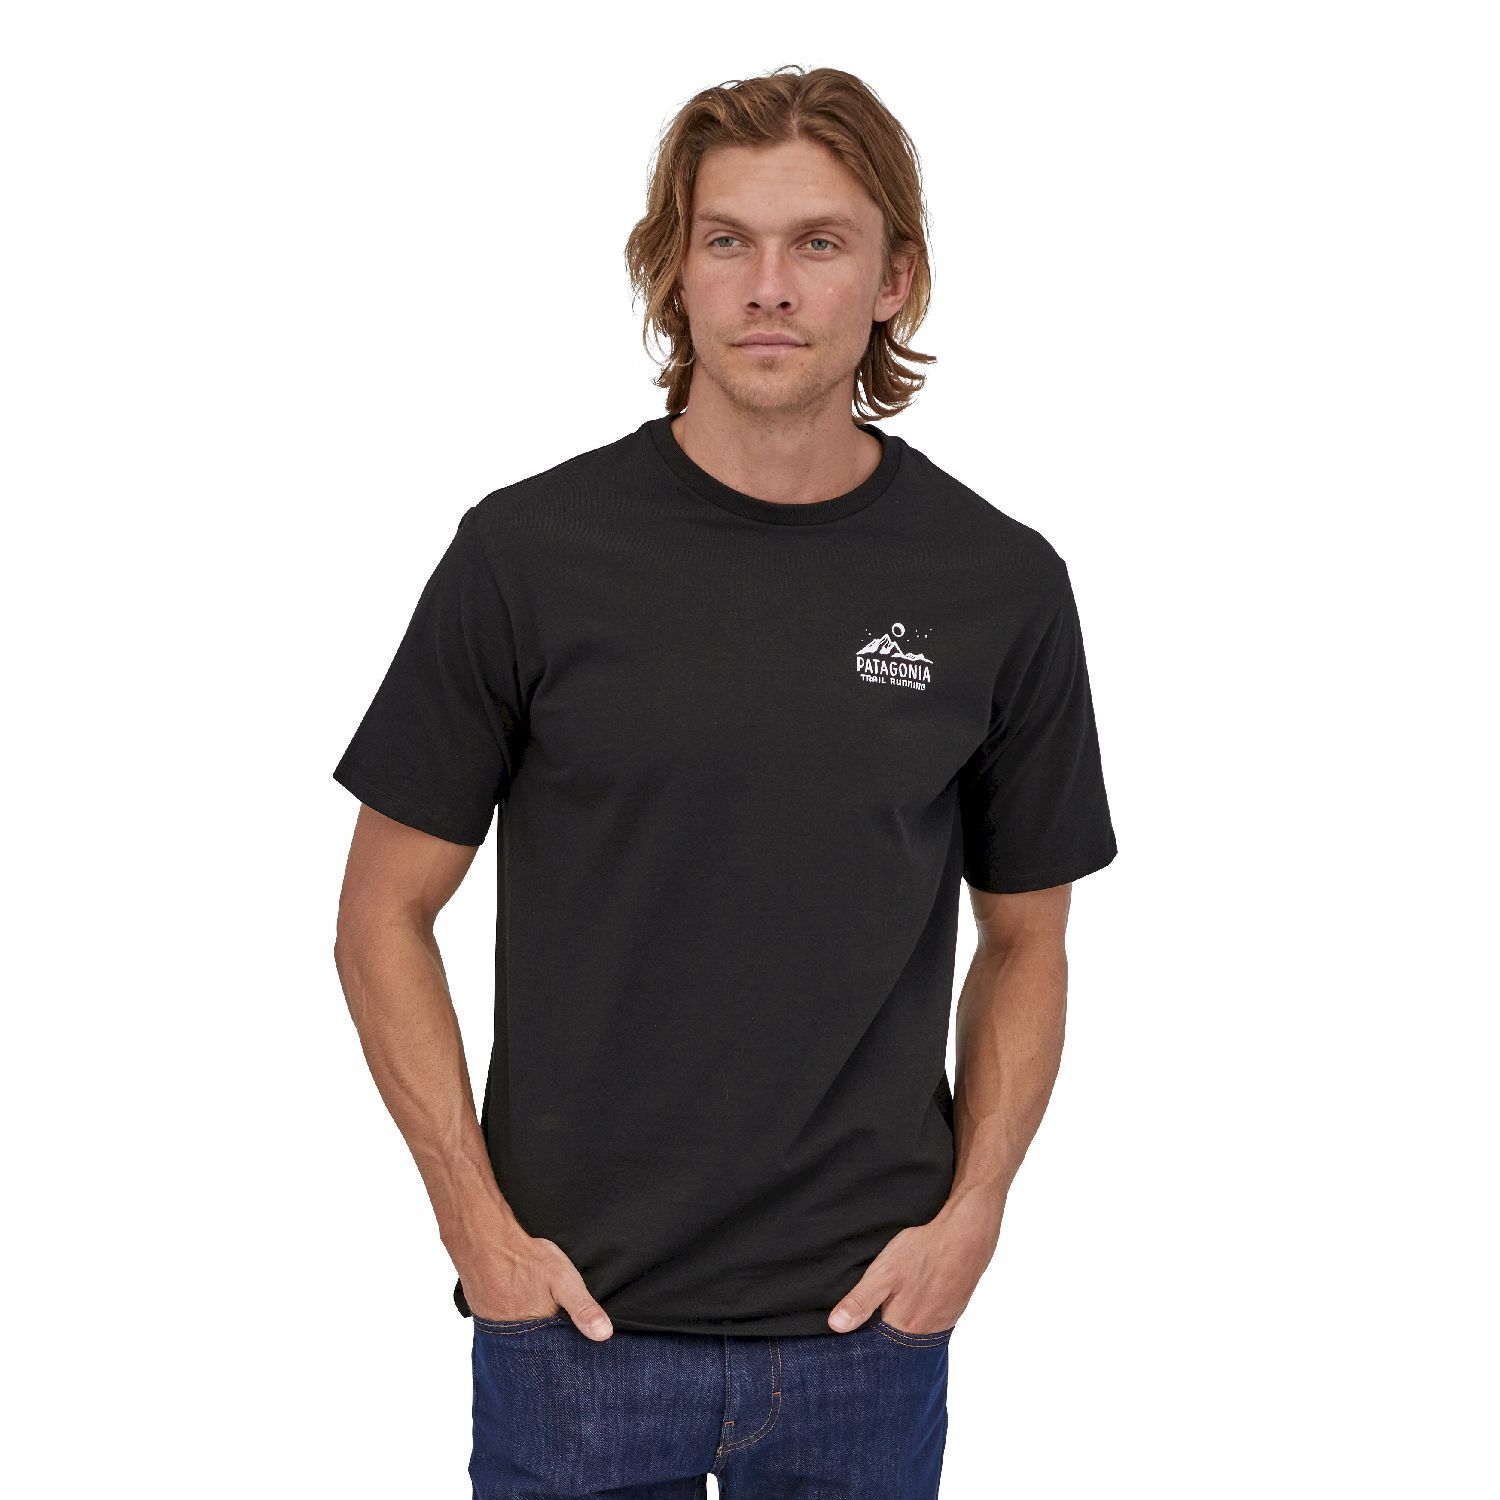 Patagonia Ridgeline Runner Responsibili-Tee - T-shirt Herrer